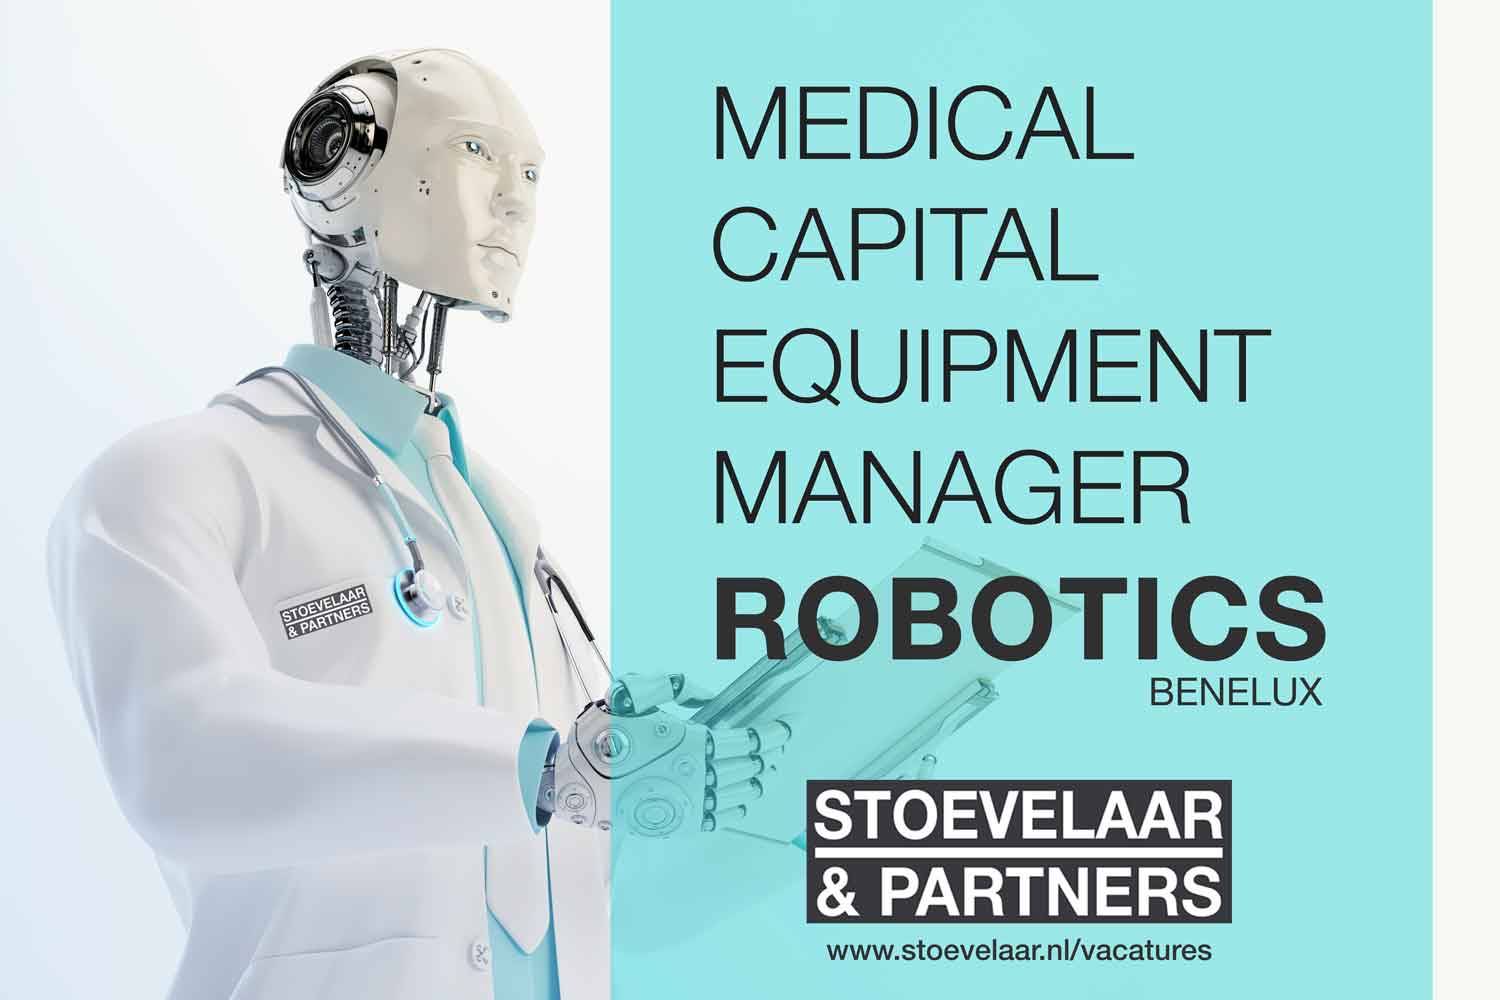 Medical Capital Equipment Manager Robotics Benelux